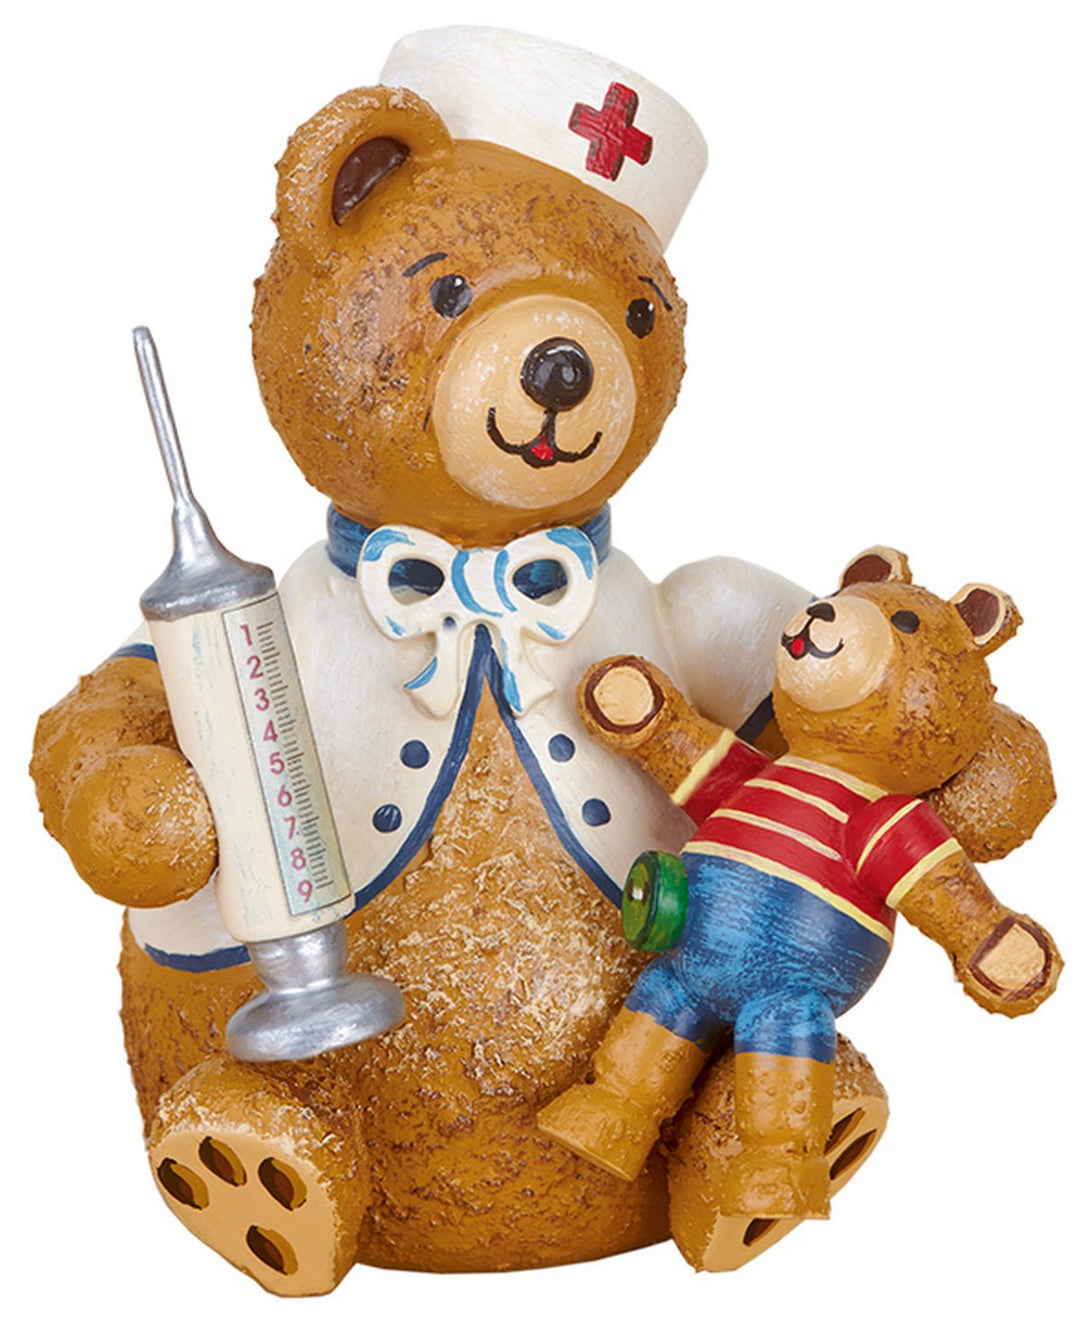 Hubrig Volkskunst 'Teddy - mini - Erste Hilfe - 7cm'-HUB-500h1008